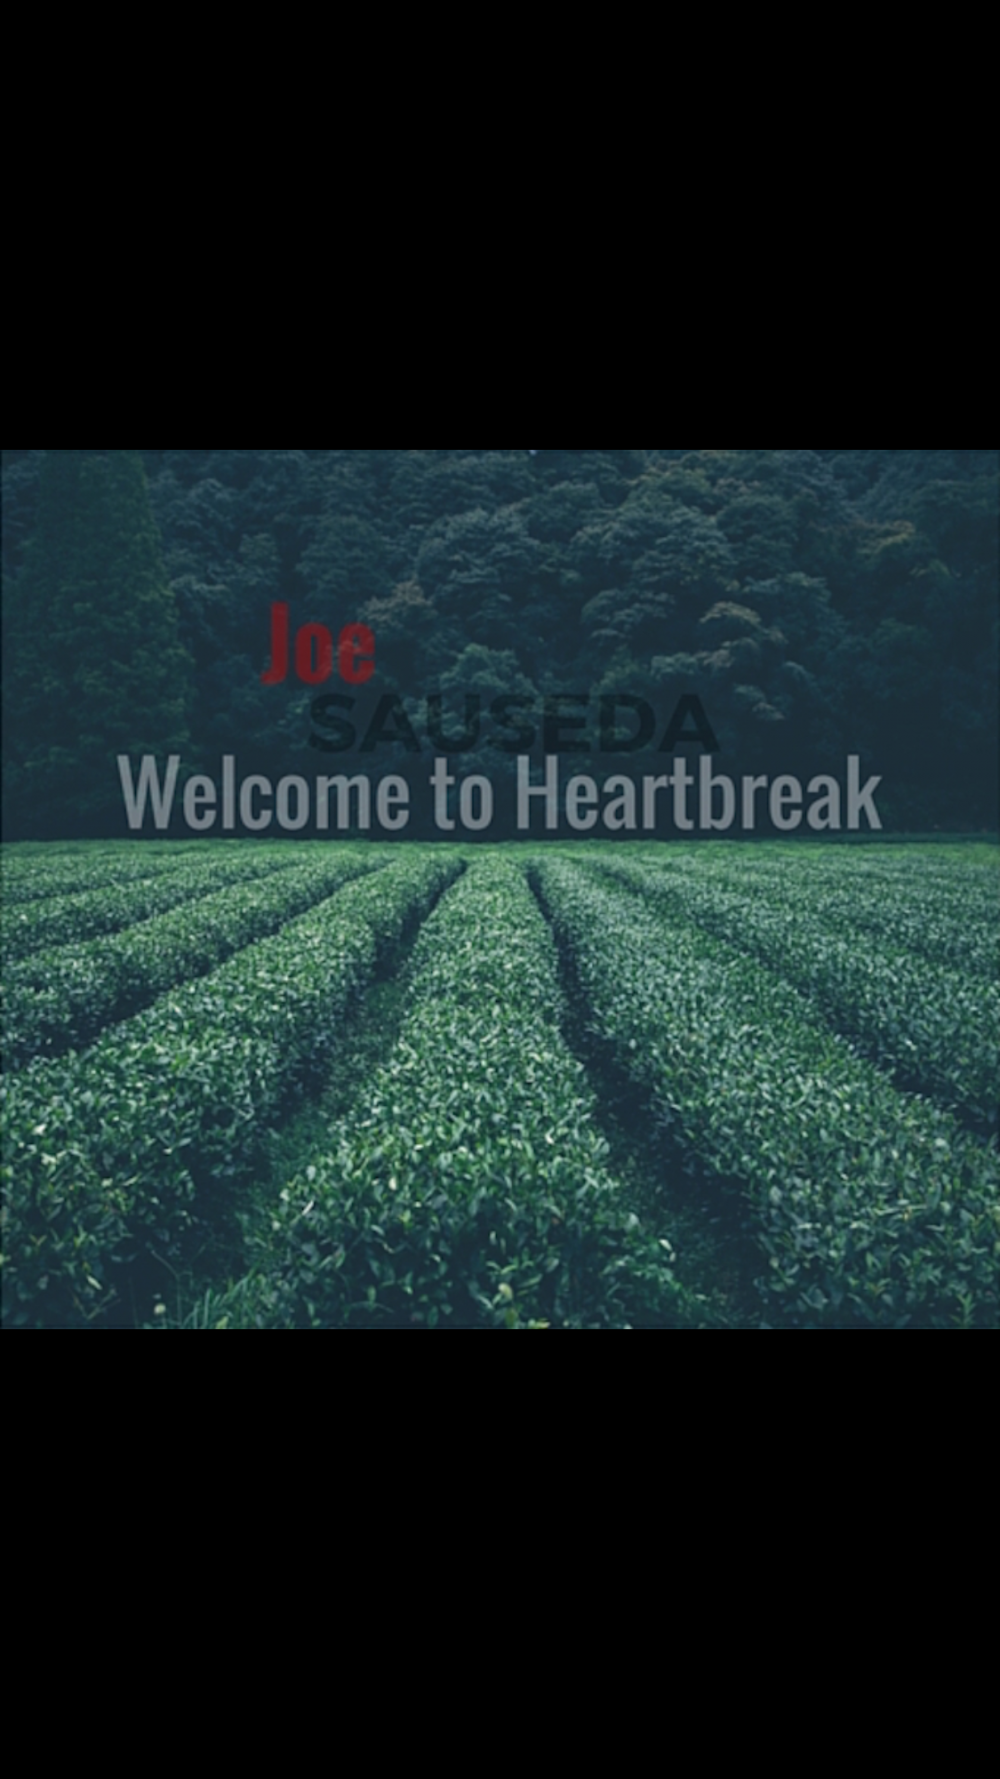 Joe Sauseda – Welcome 2 Heartbreak